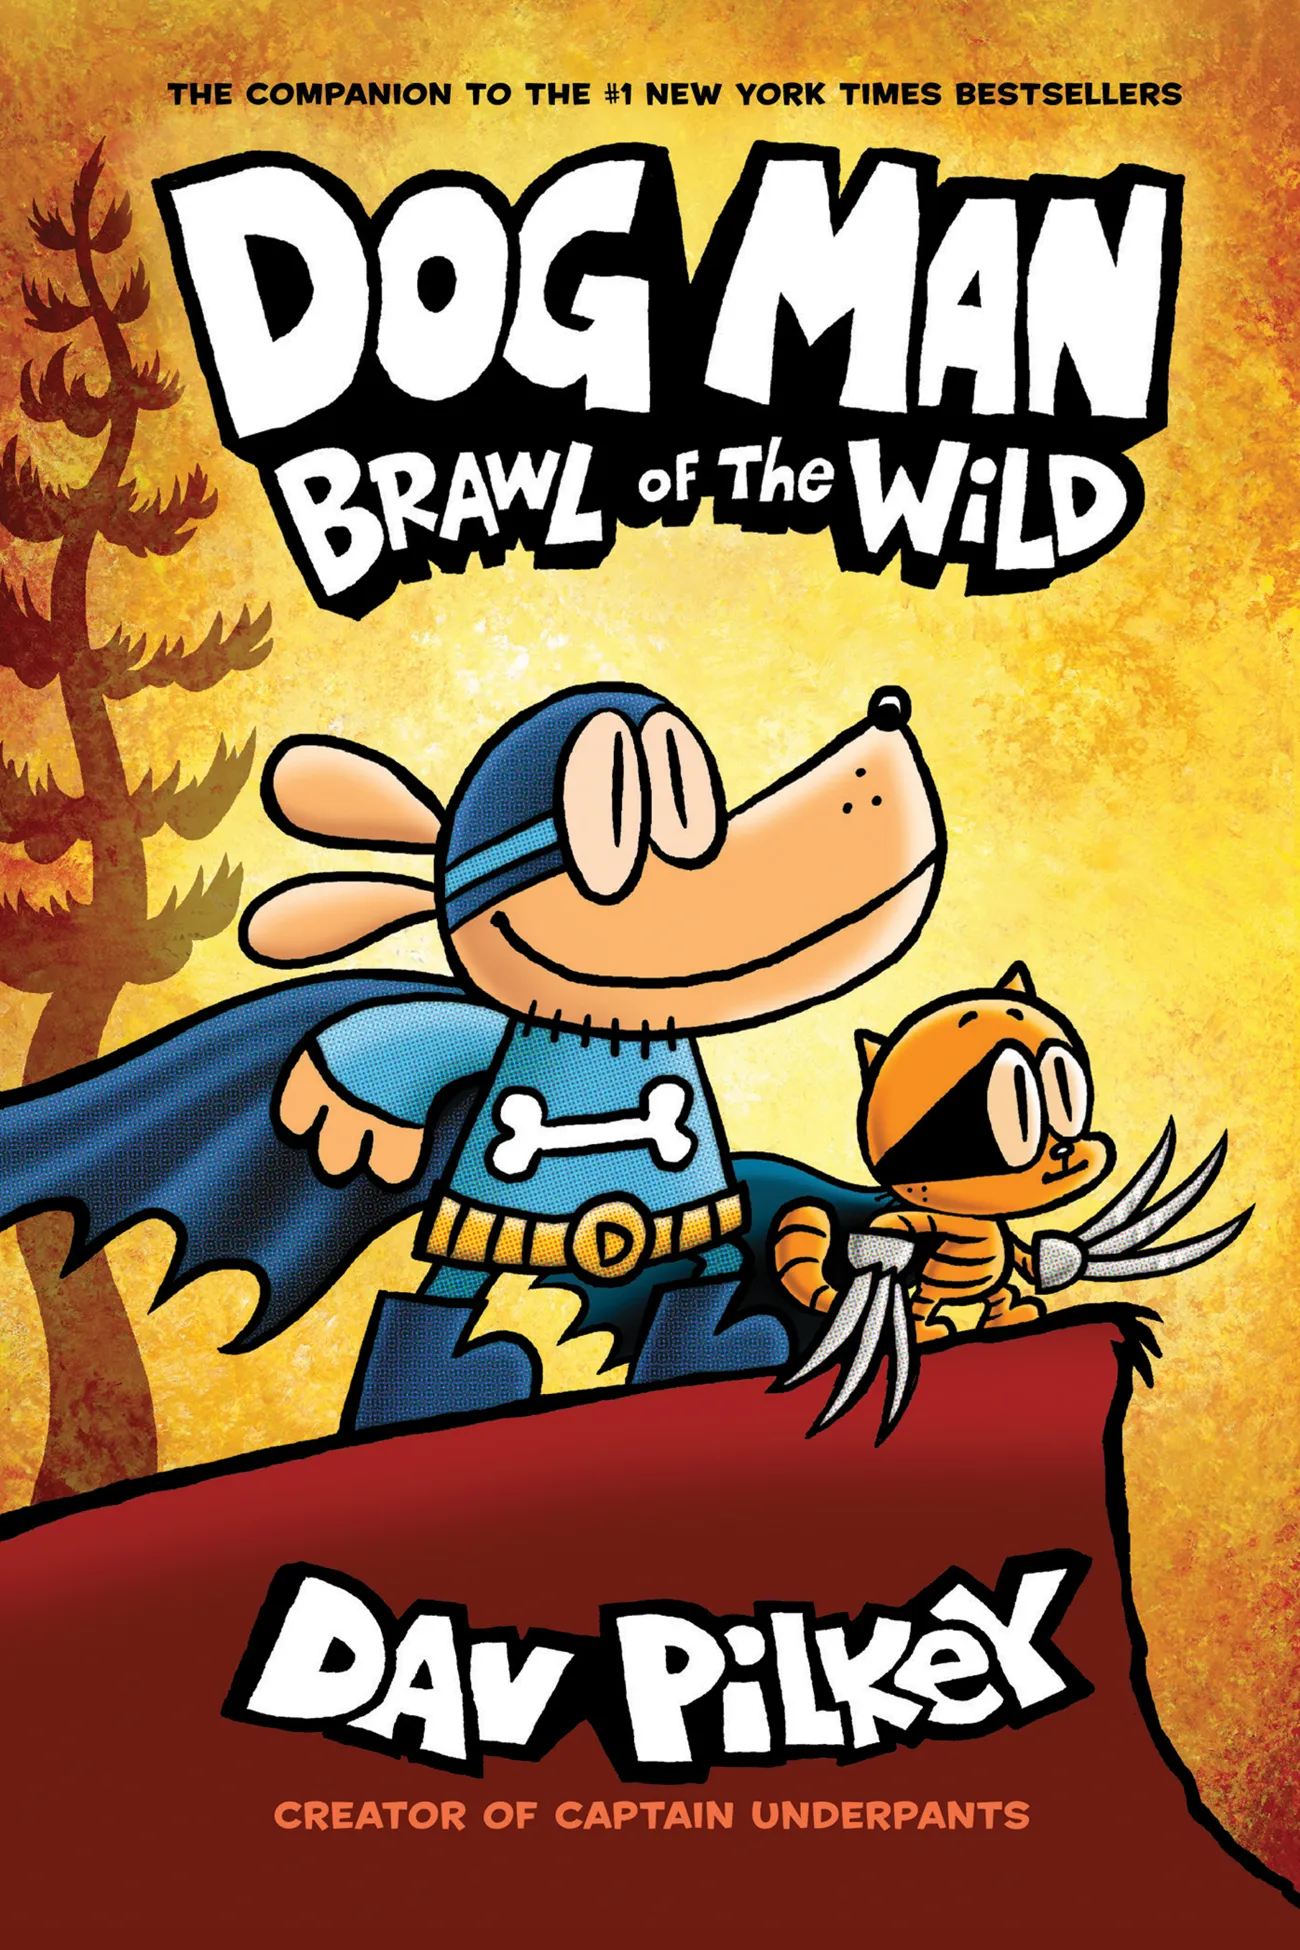 Brawl of the Wild: A Graphic Novel (Dog Man #6)